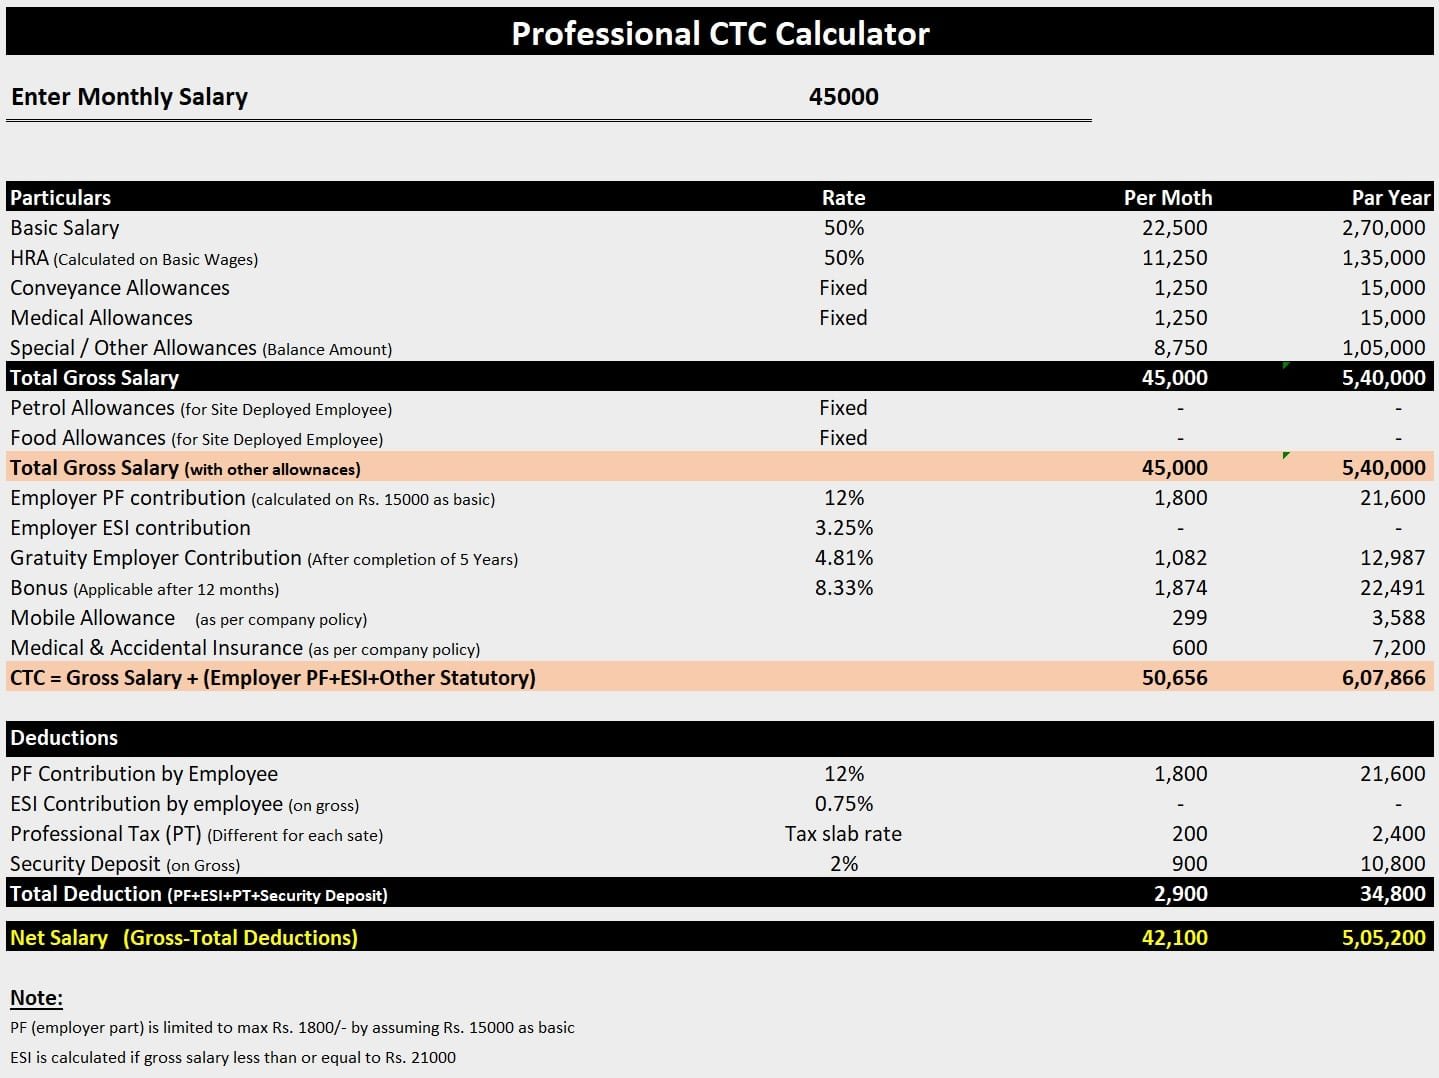 CTC Calculator in Excel Download (with Bonus & Gratuity)